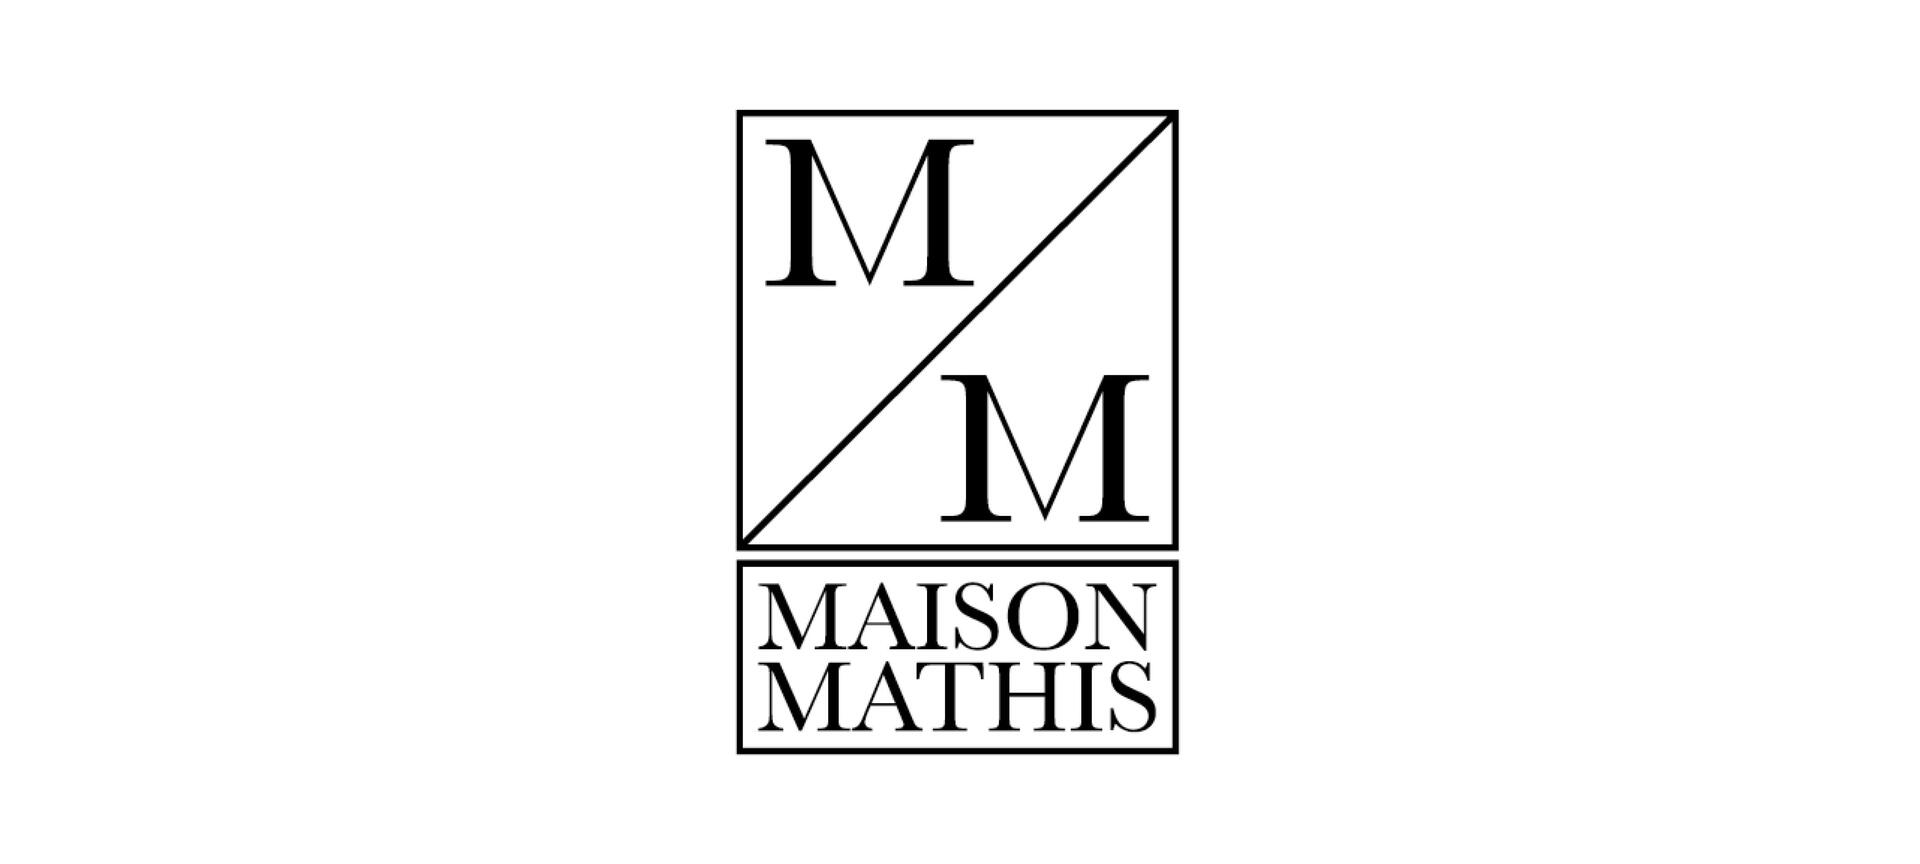 MAISON MATHIS - LOGO Maison Mathis